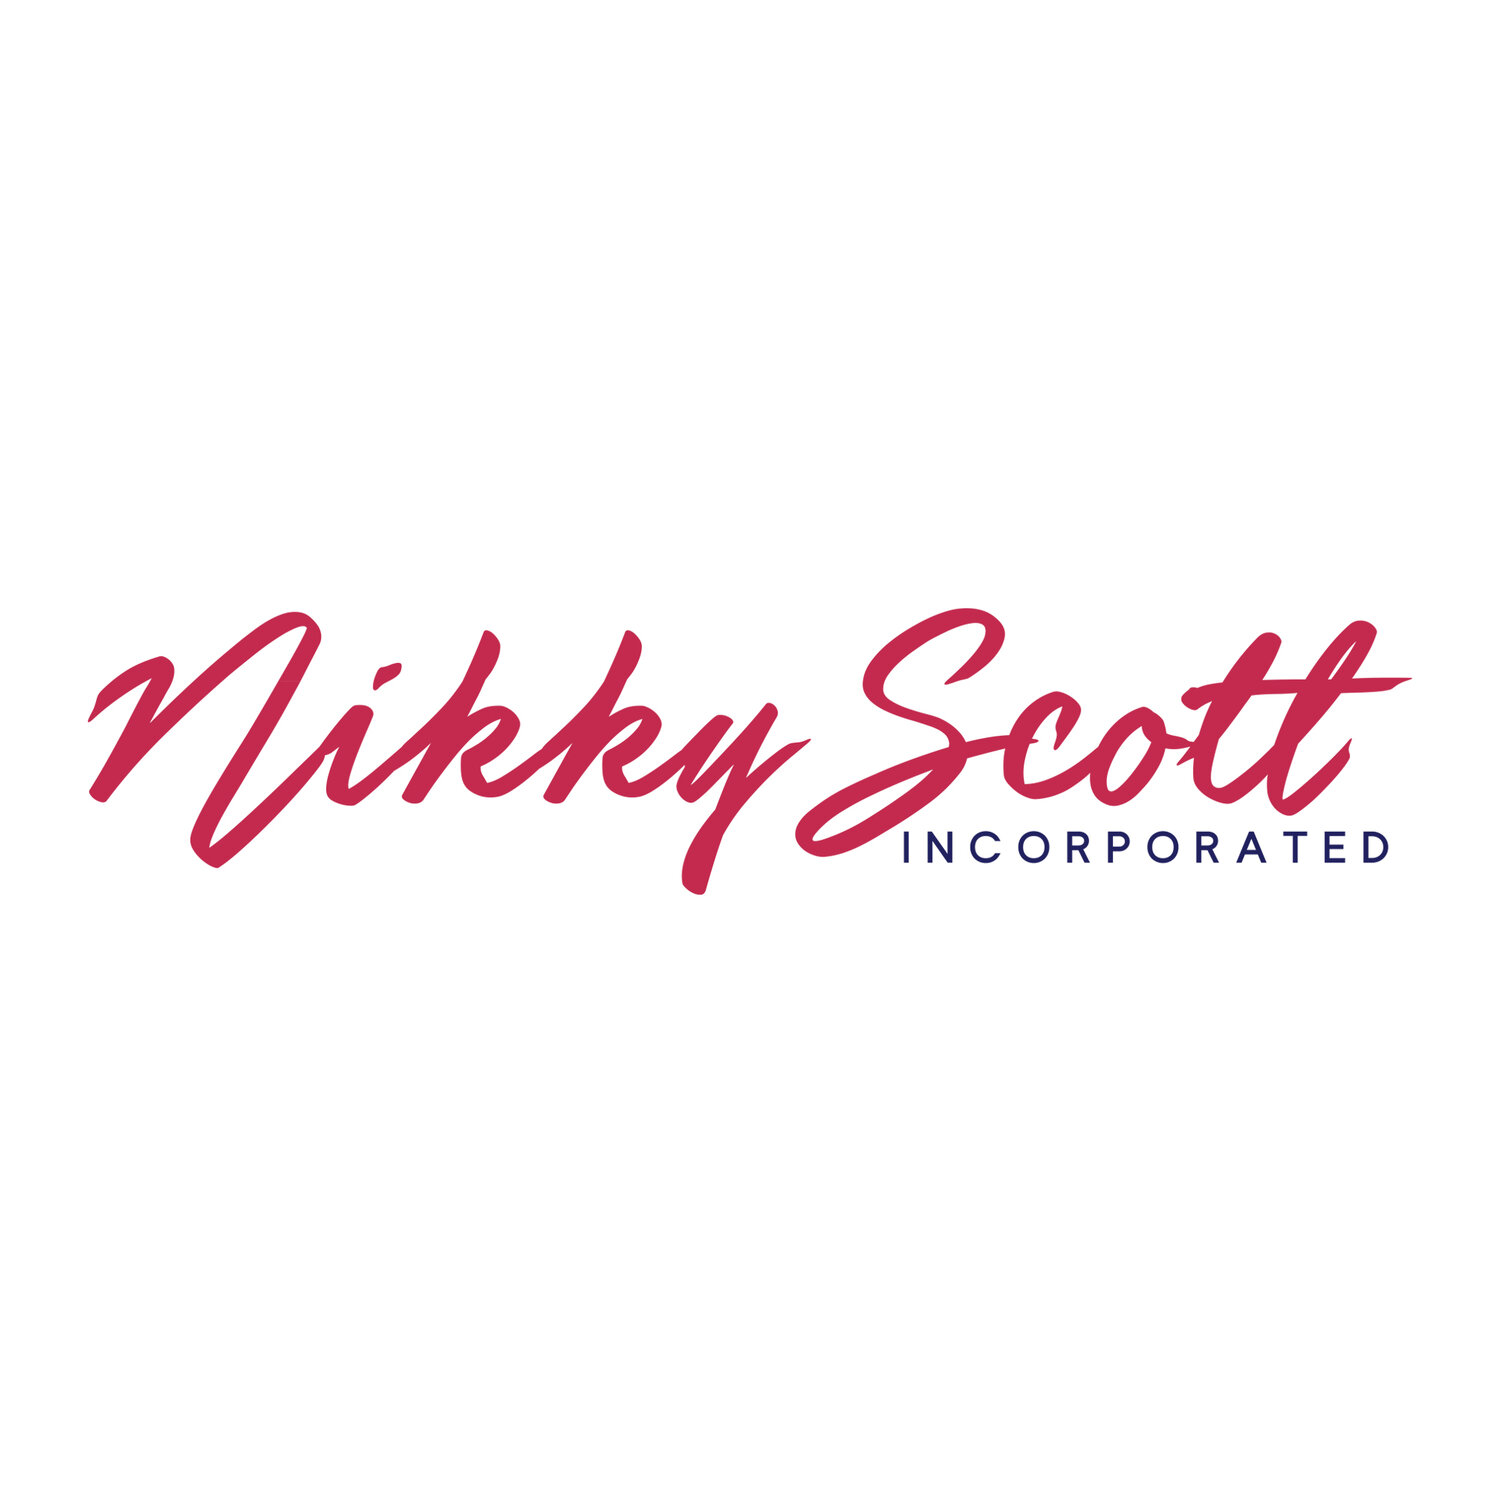 Nikky Scott Inc.